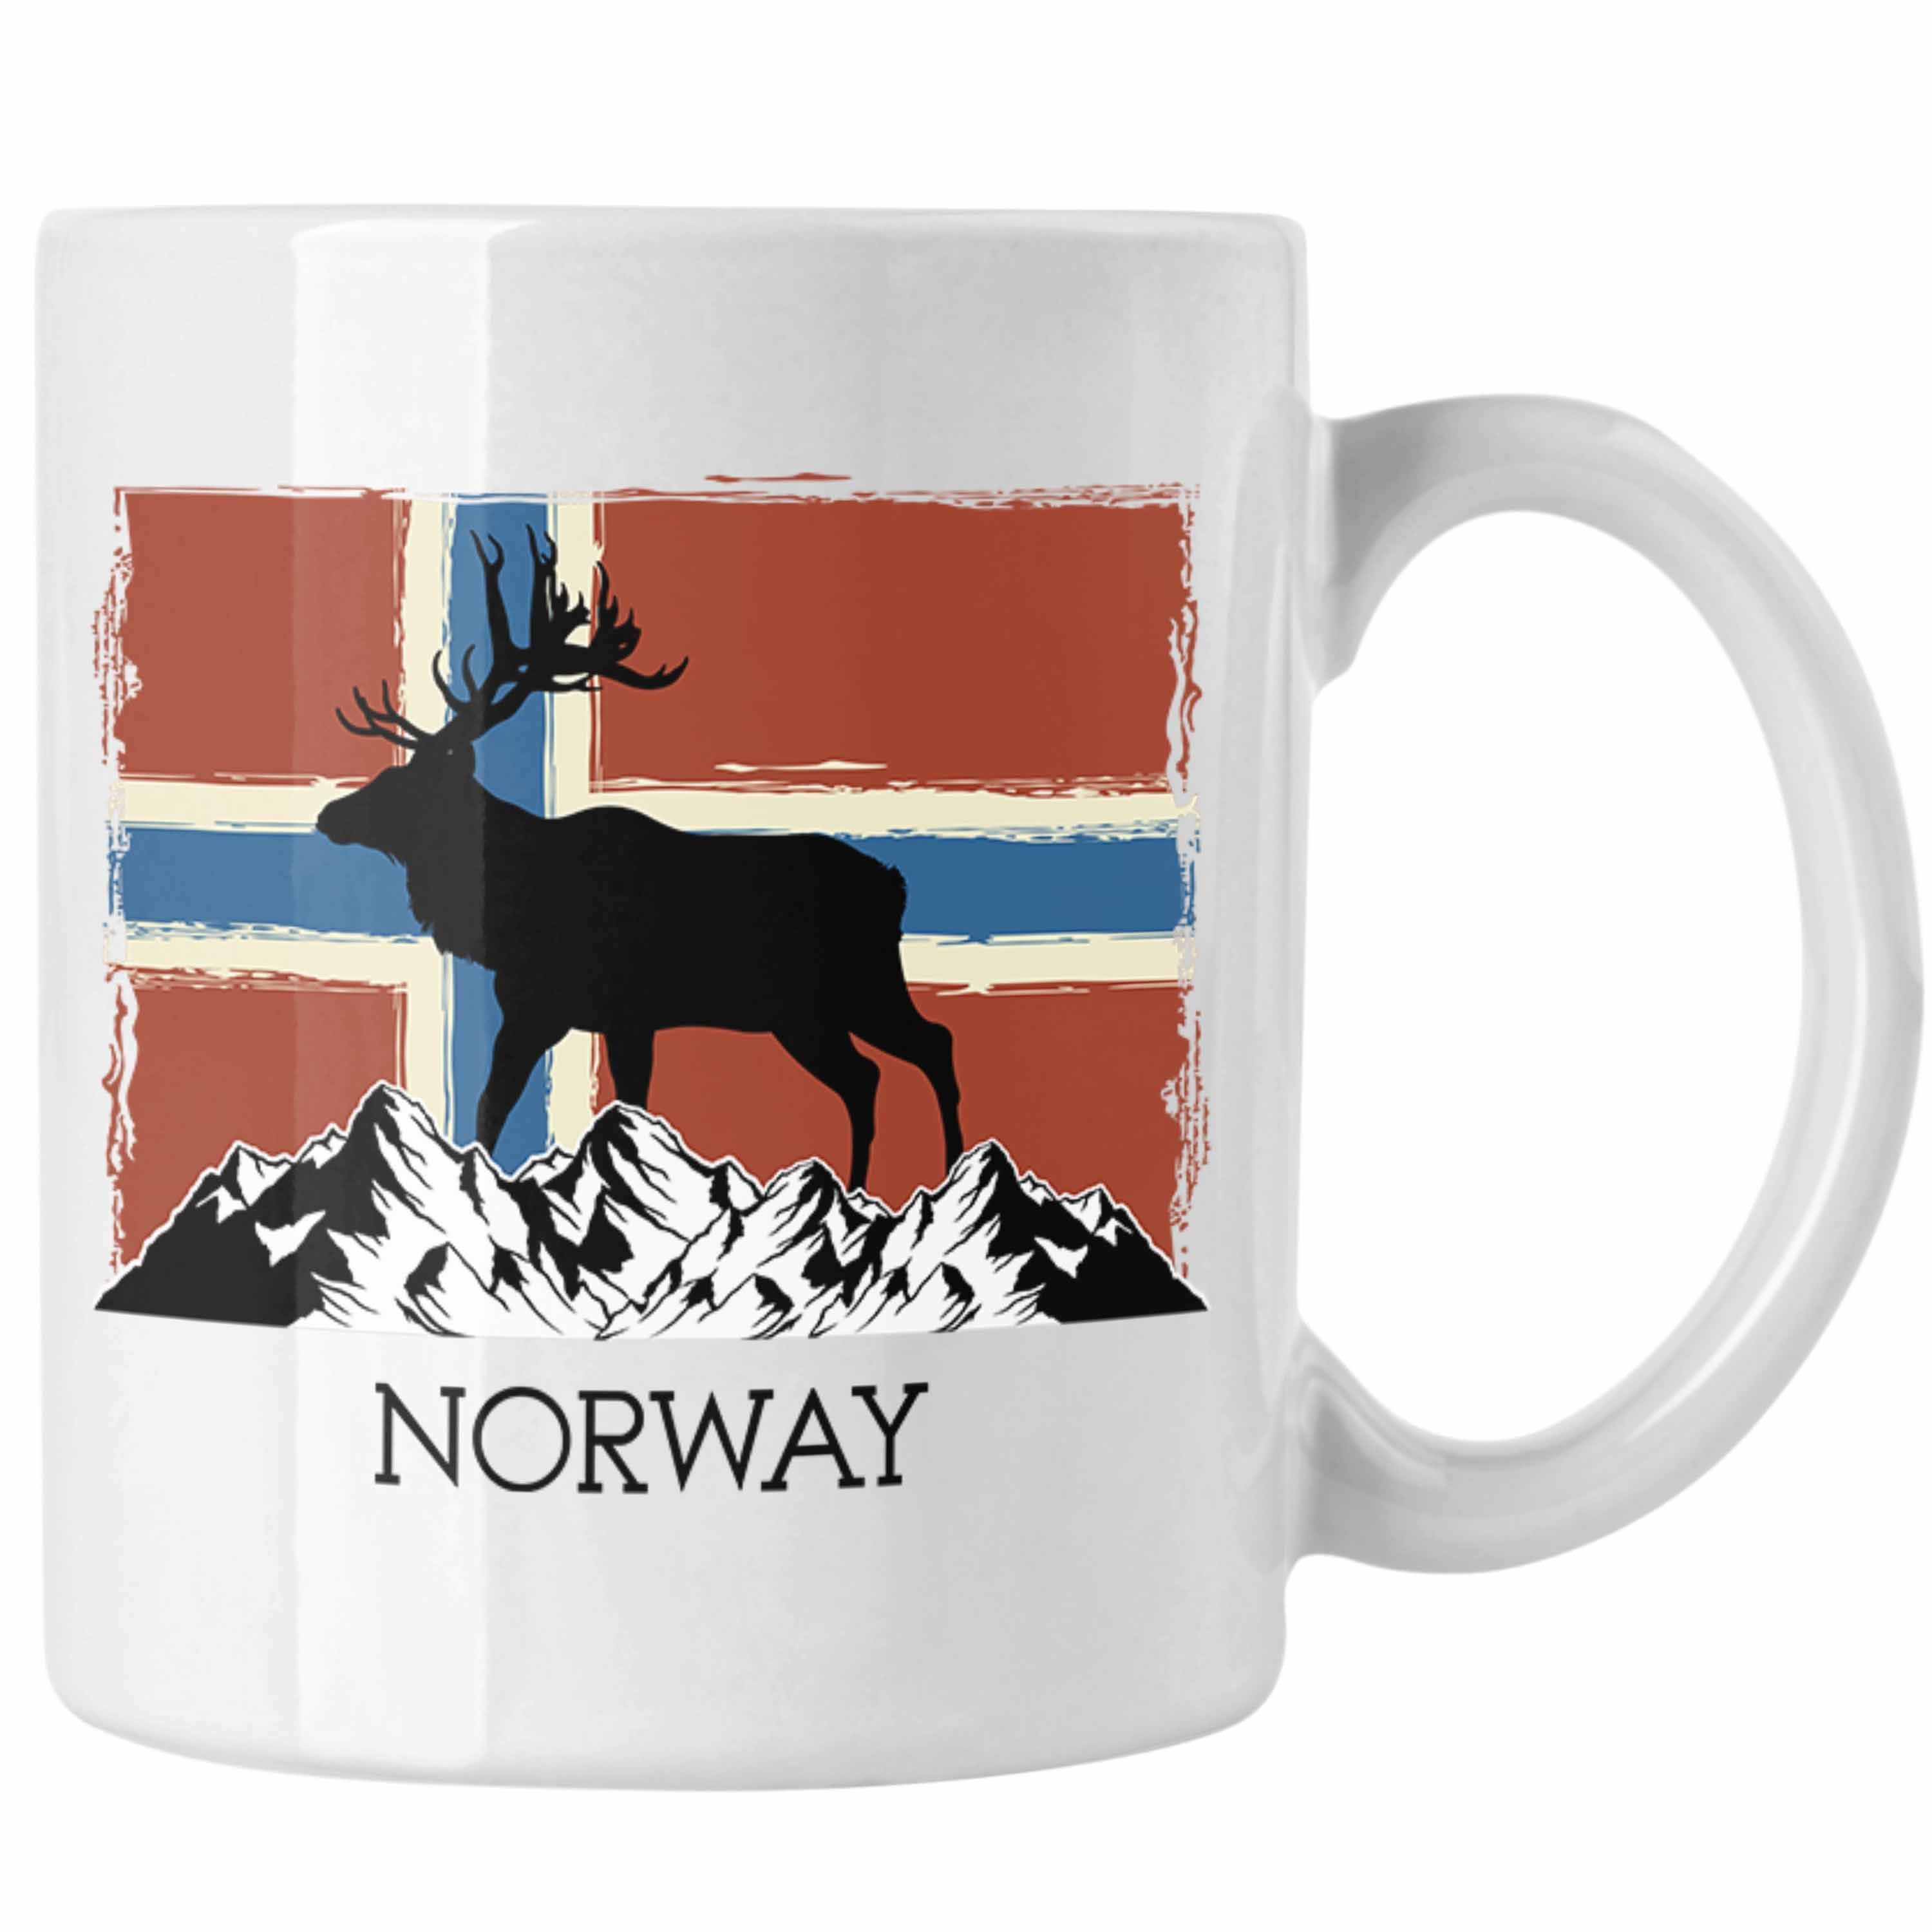 Trendation Tasse Trendation - Norwegen Geschenke Tasse Flagge Nordkap Elch Norway Weiss | Teetassen